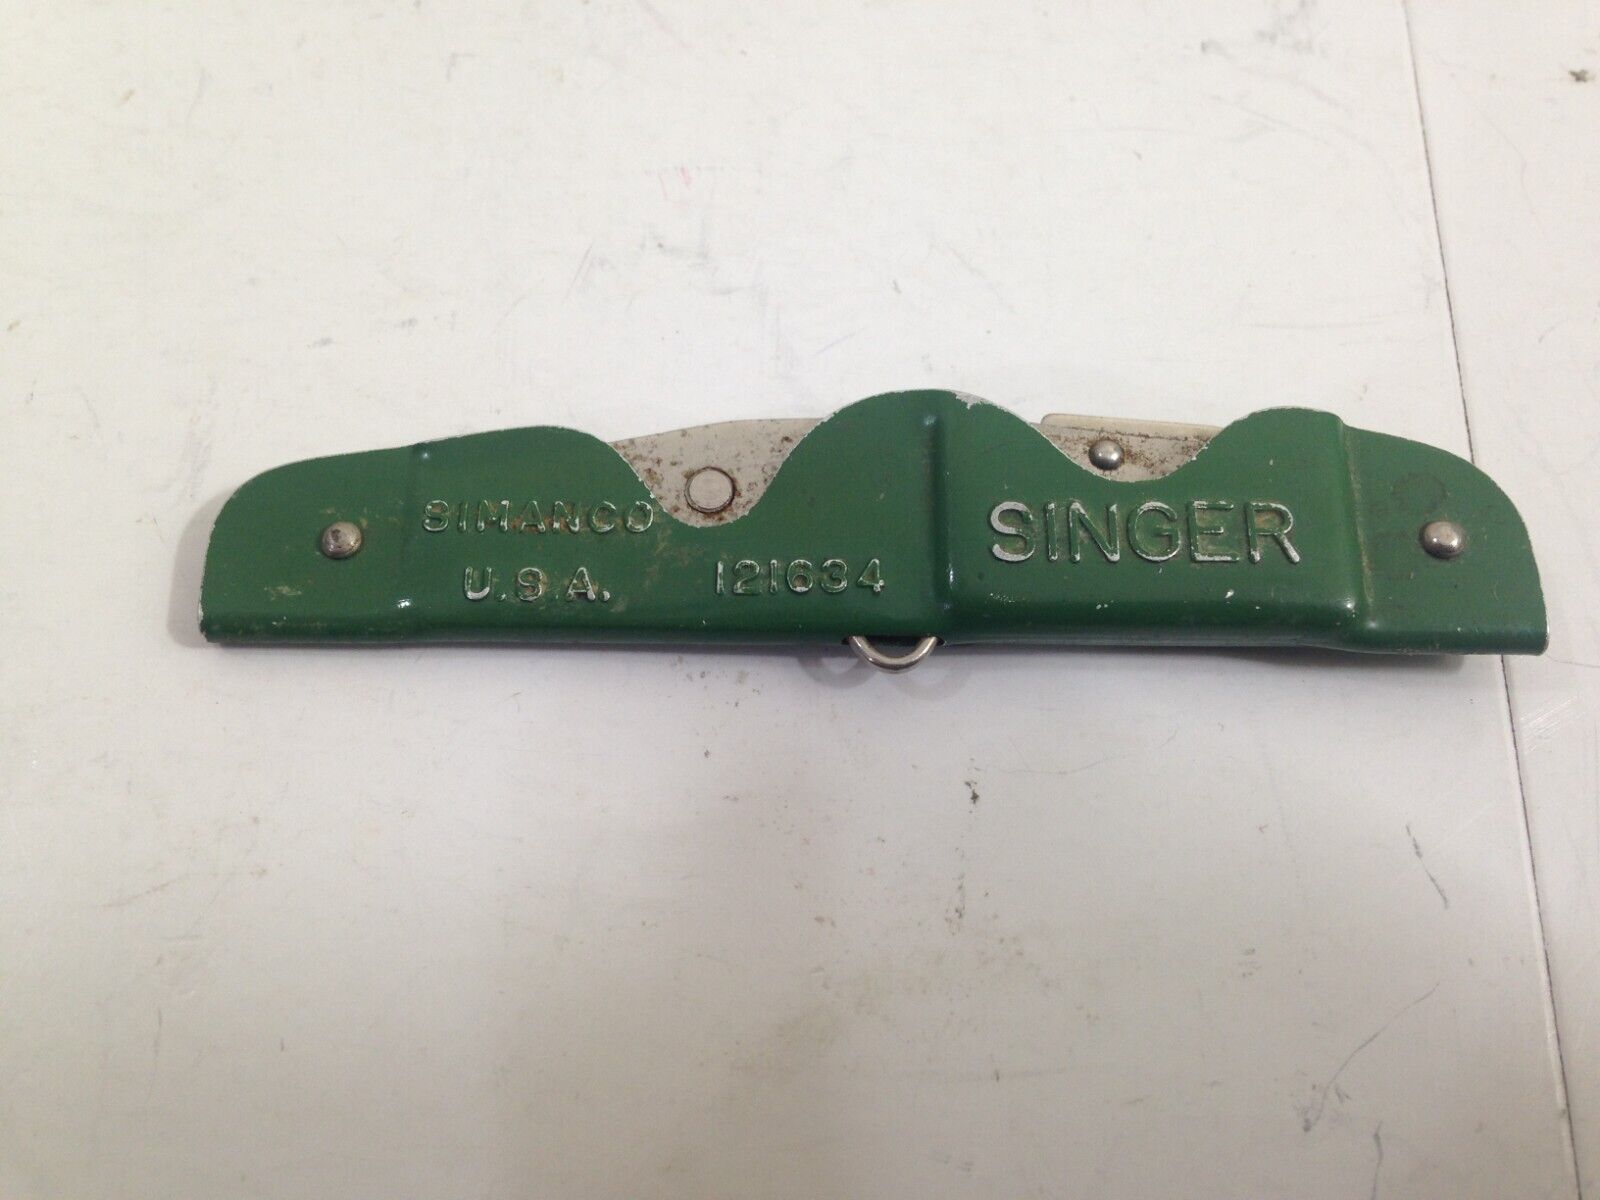 Vintage SINGER Simanco 121634 Sewing Machines Seam Ripper & Needle Threader Tool